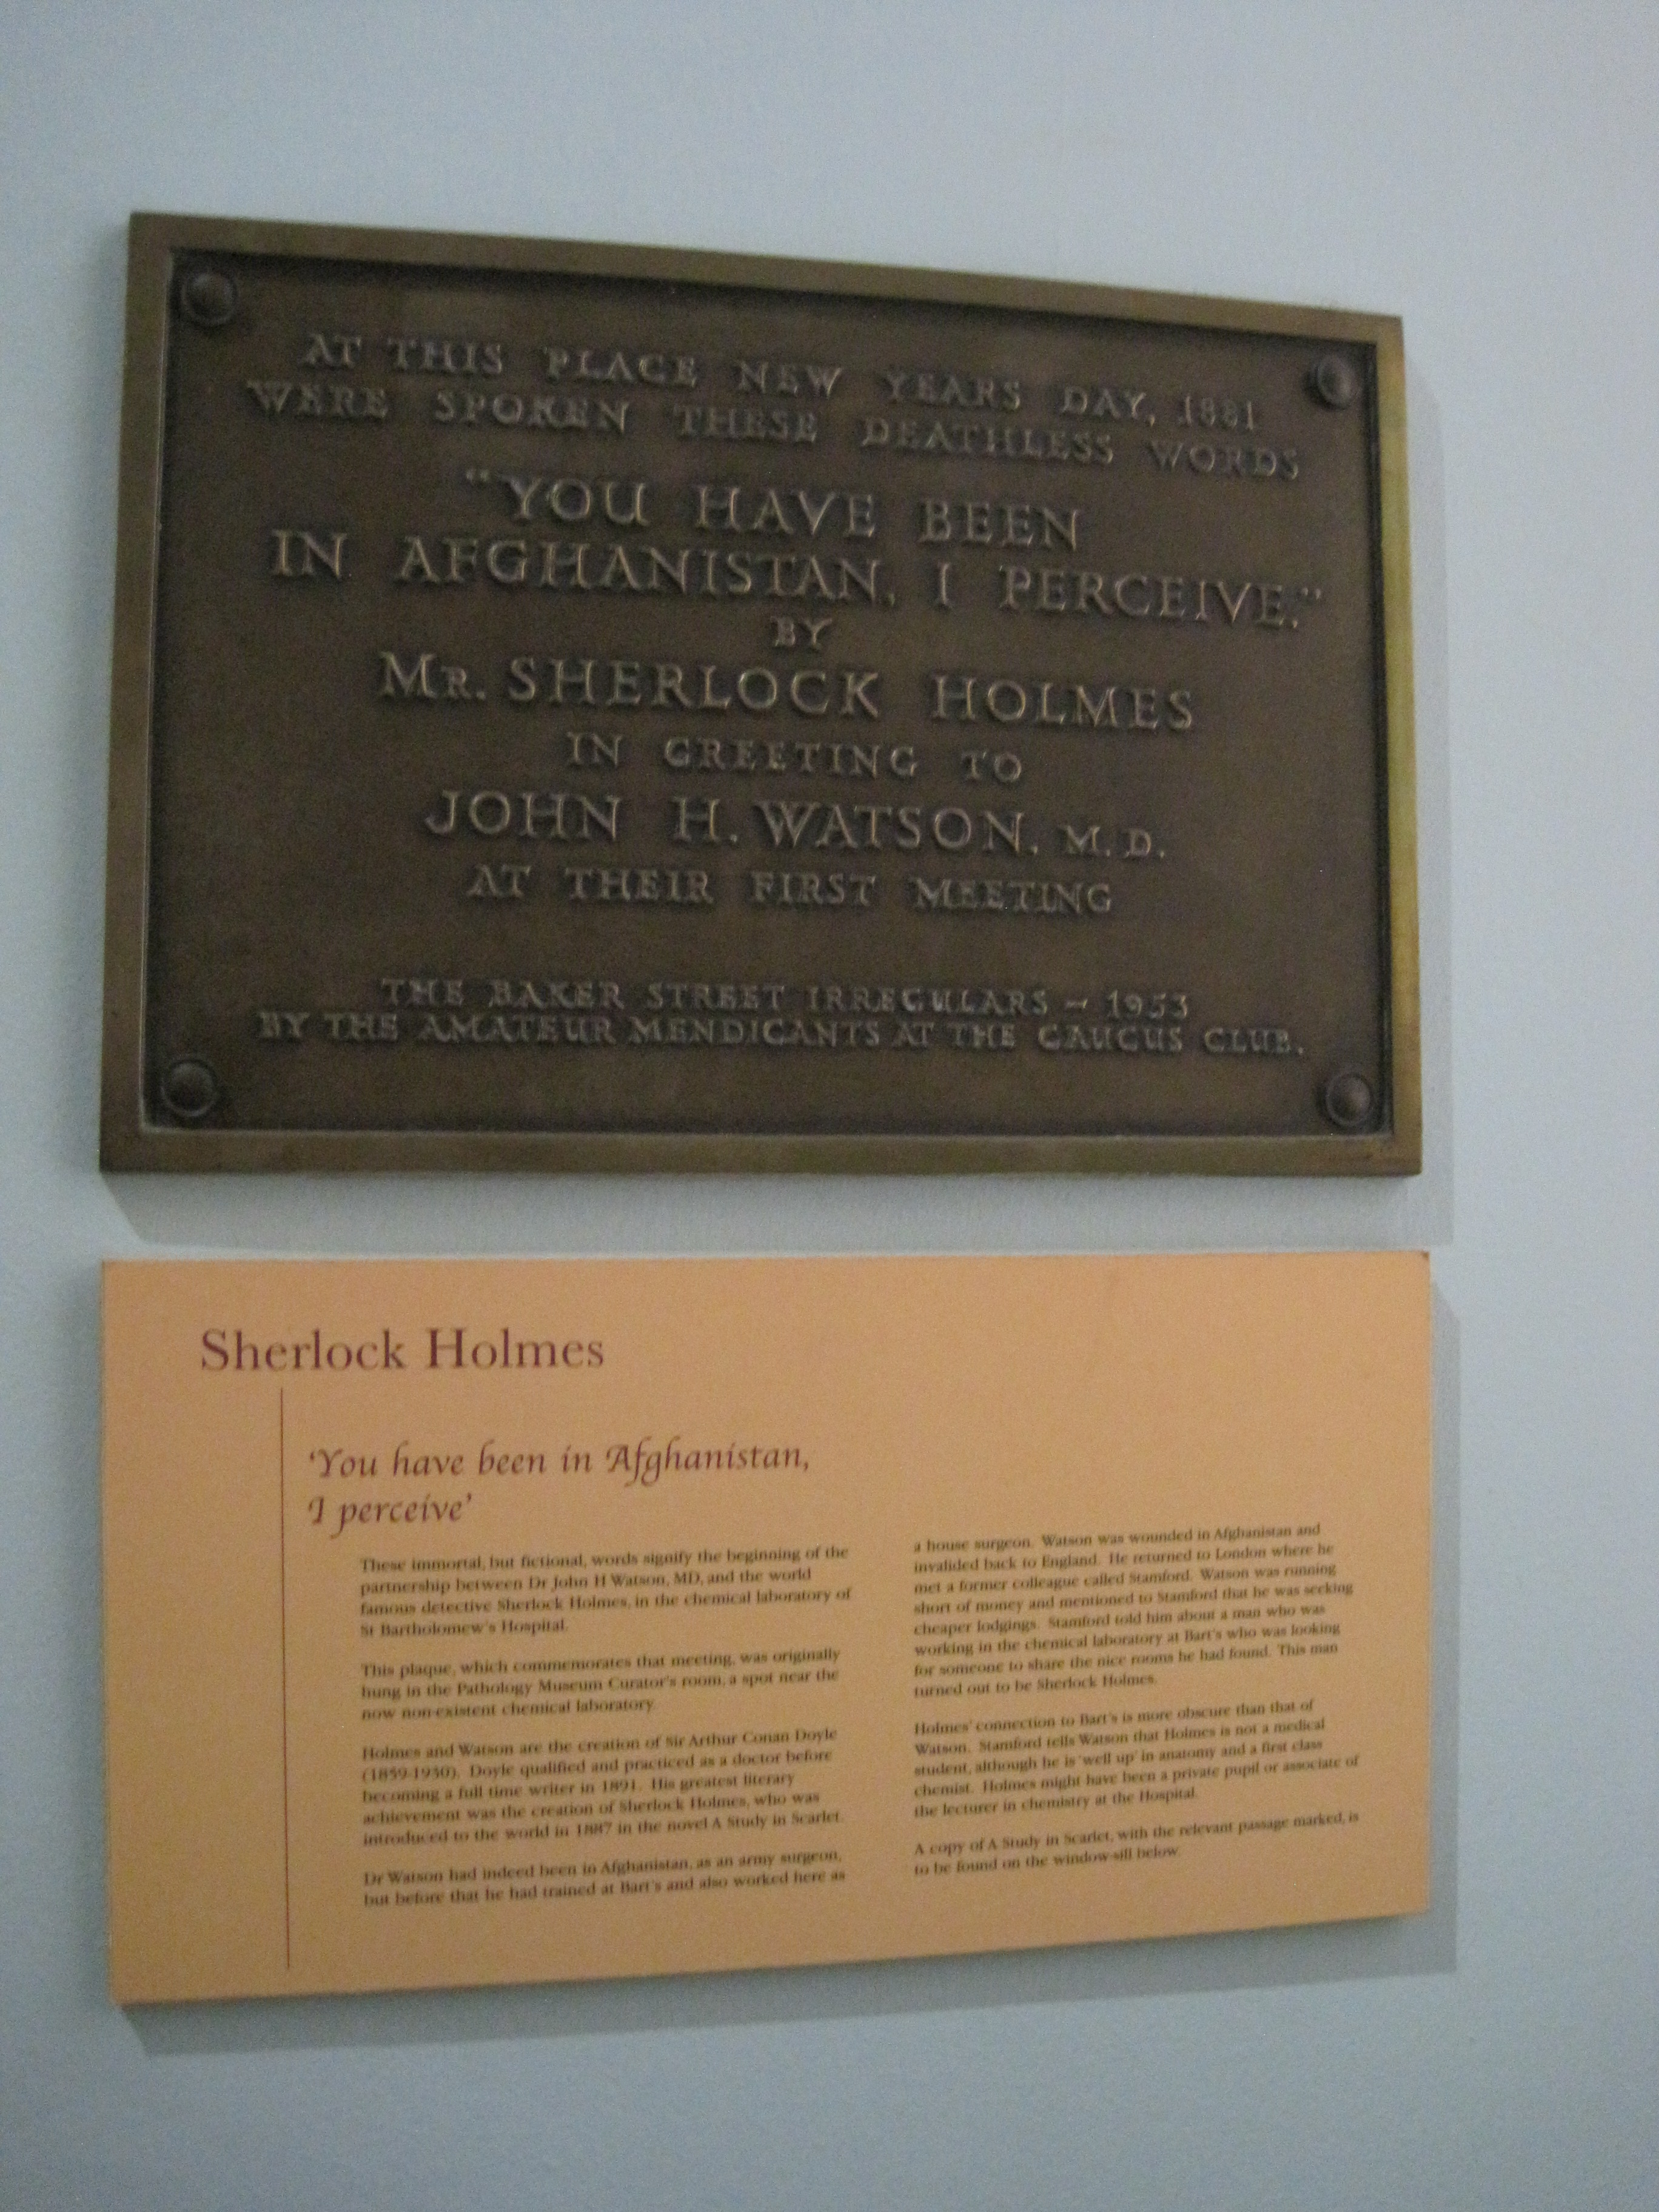 The Charterhouse - links to Sherlock Holmes - photo by Juliamaud